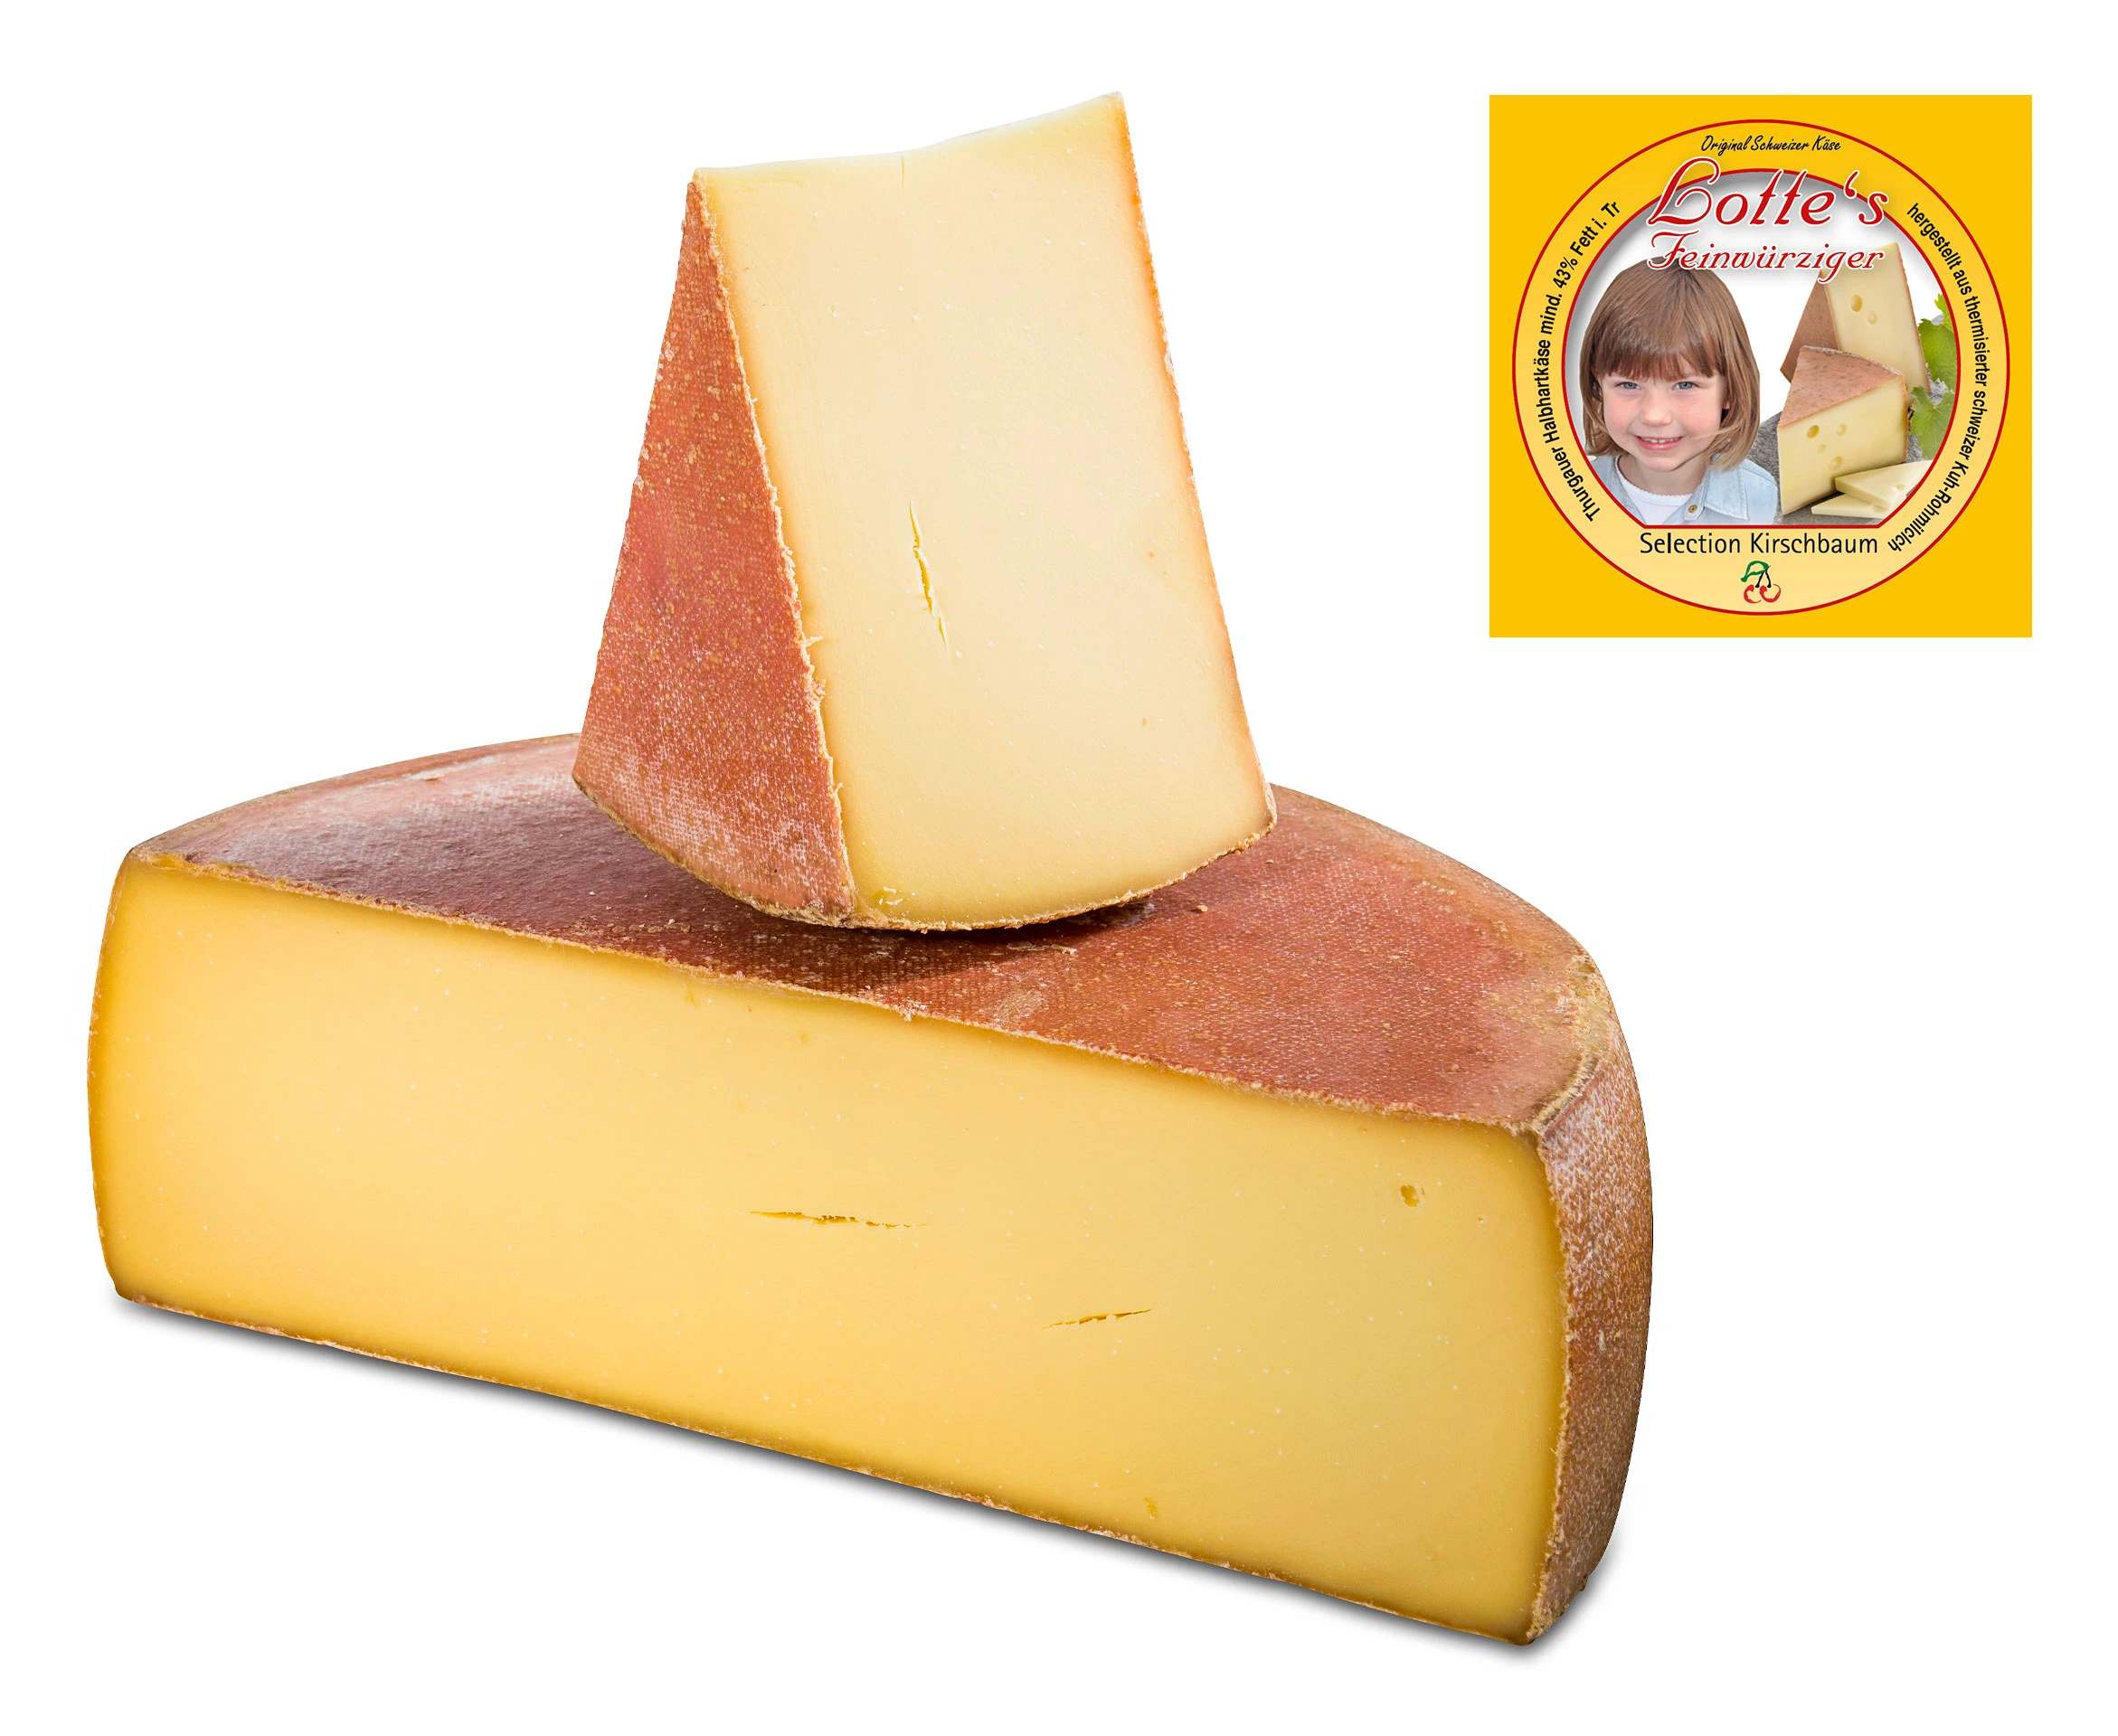 Lotte's Feinwürziger Käse